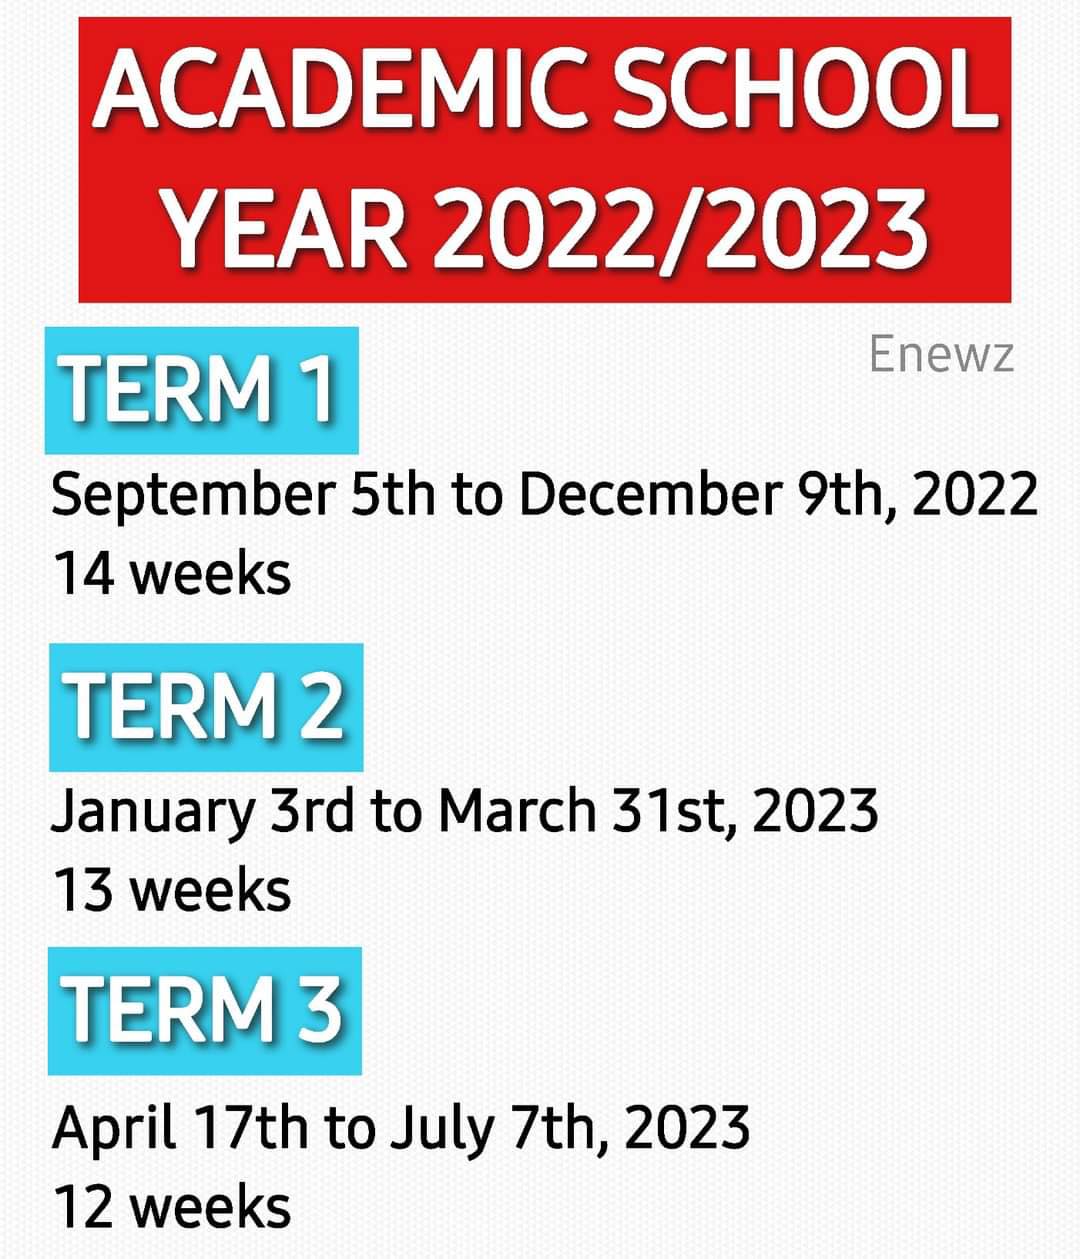 school term 2019-2020